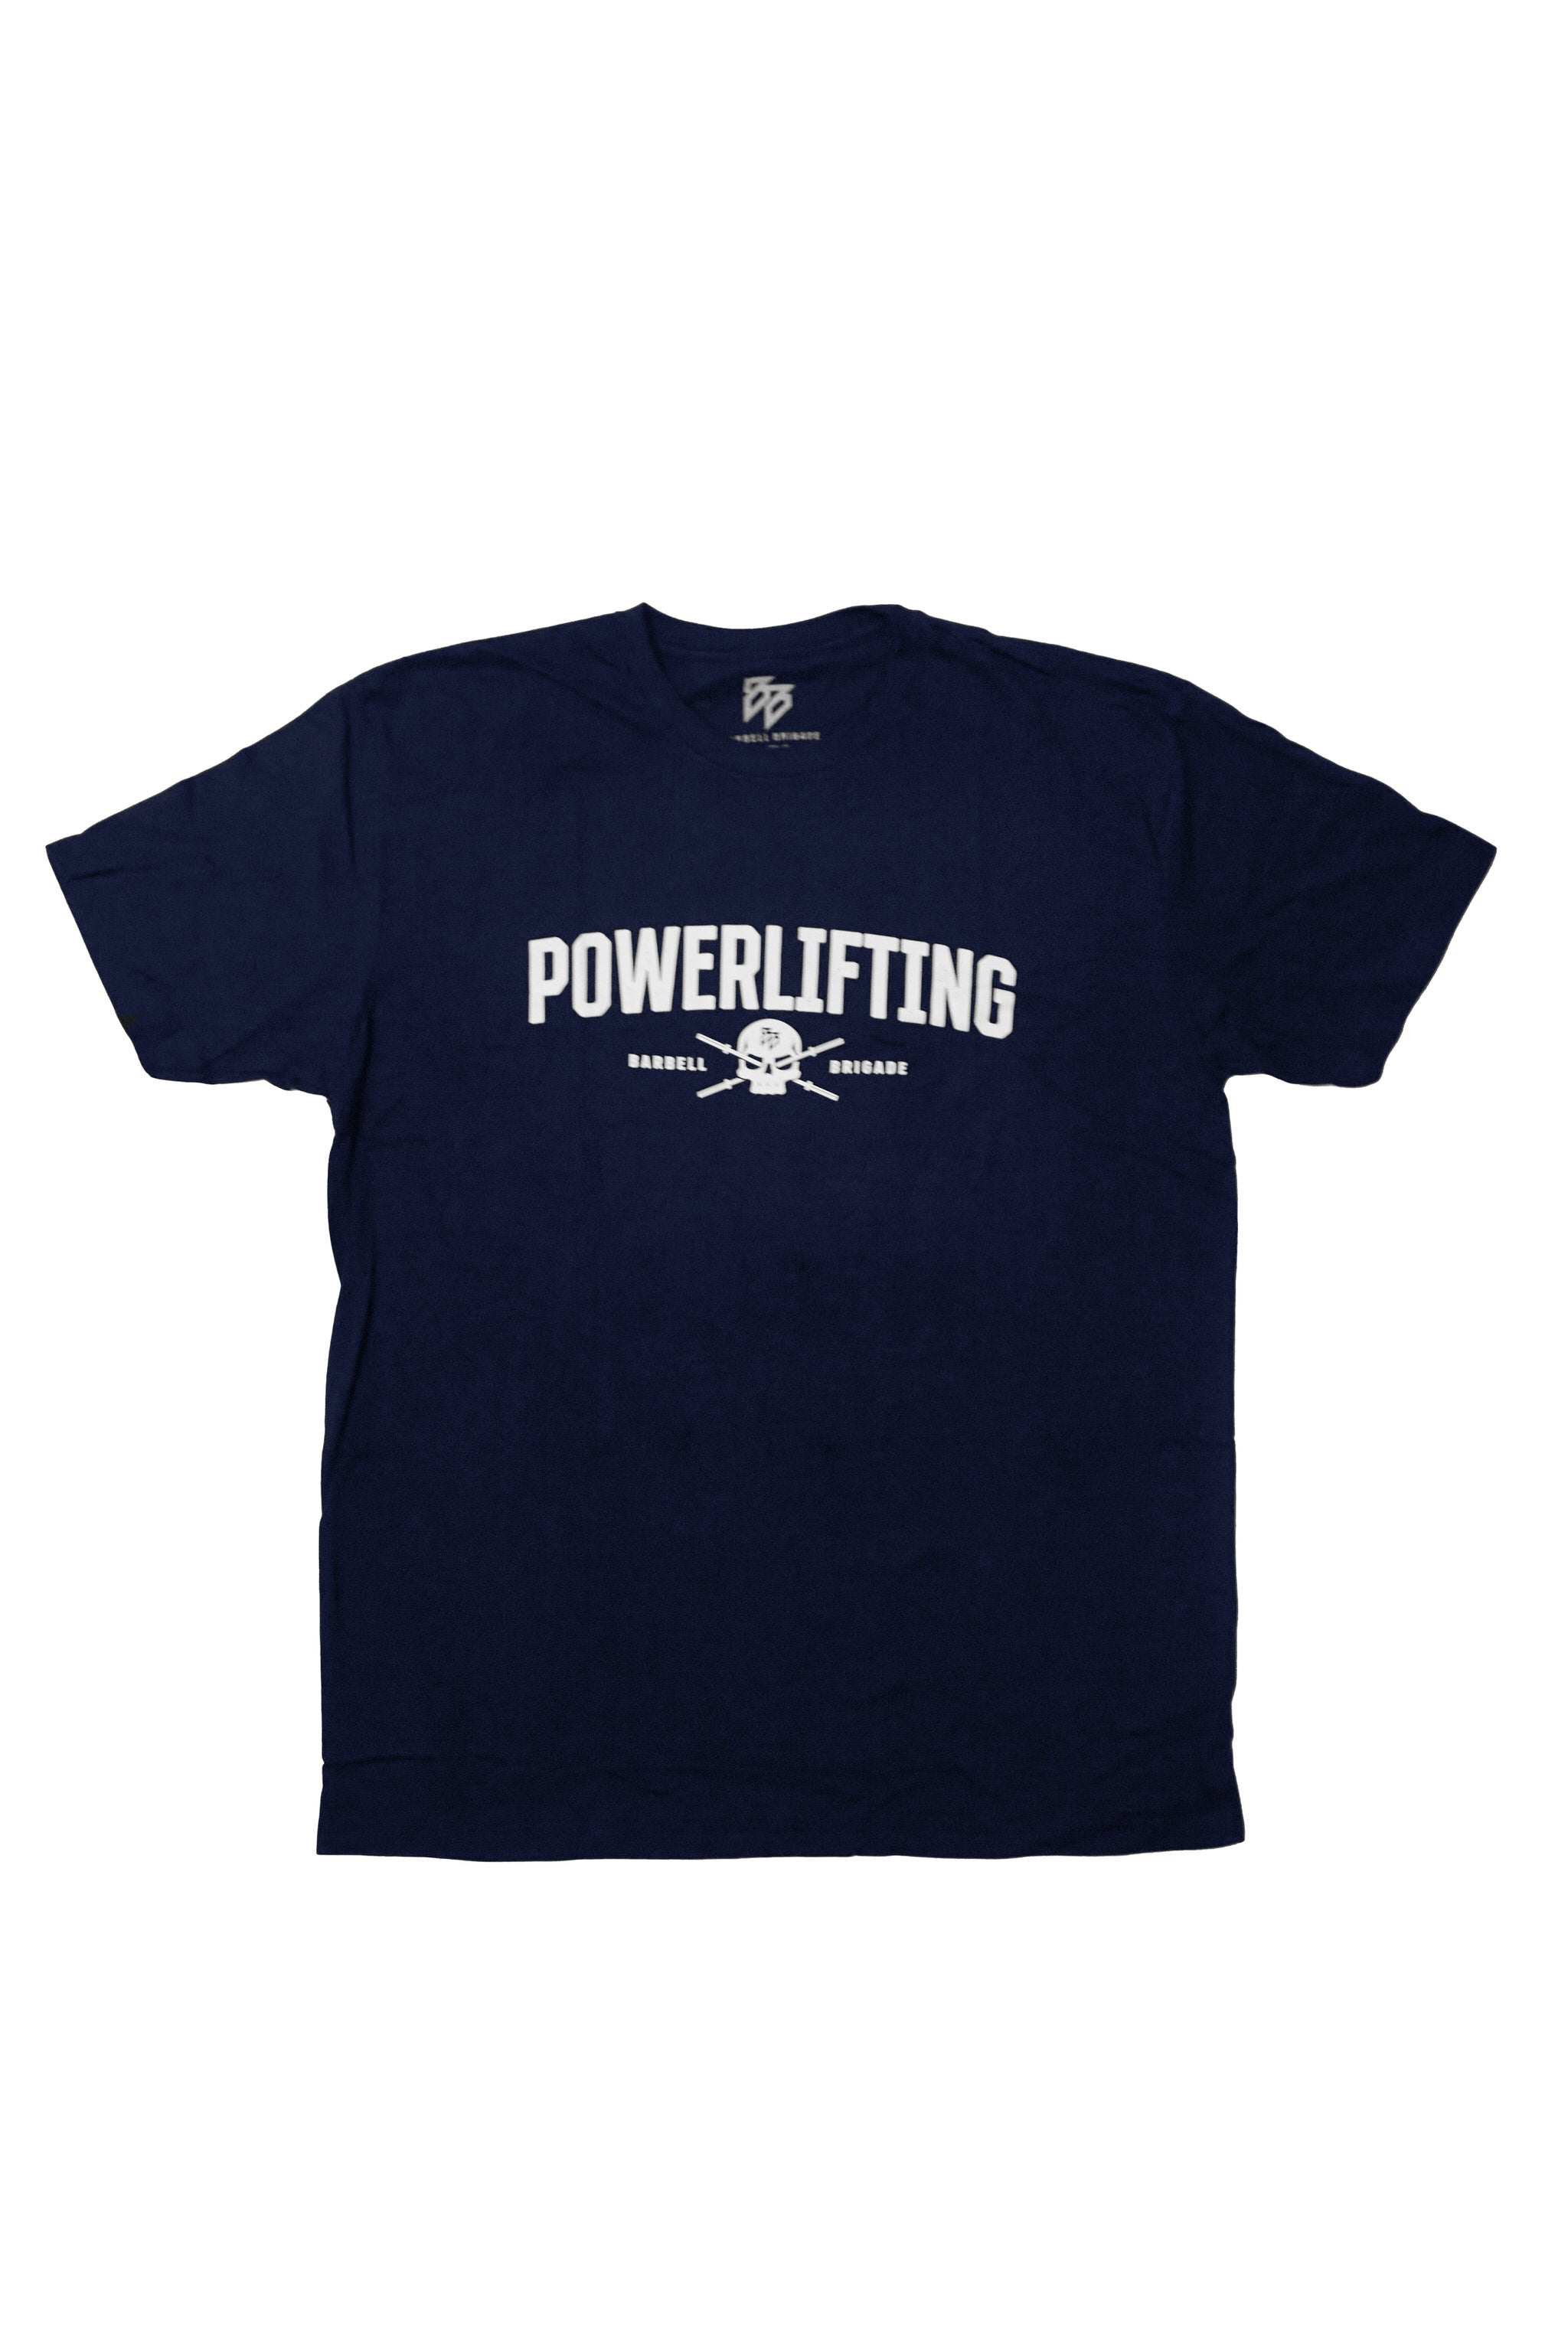 Powerlifting - Tee (Midnight Navy)